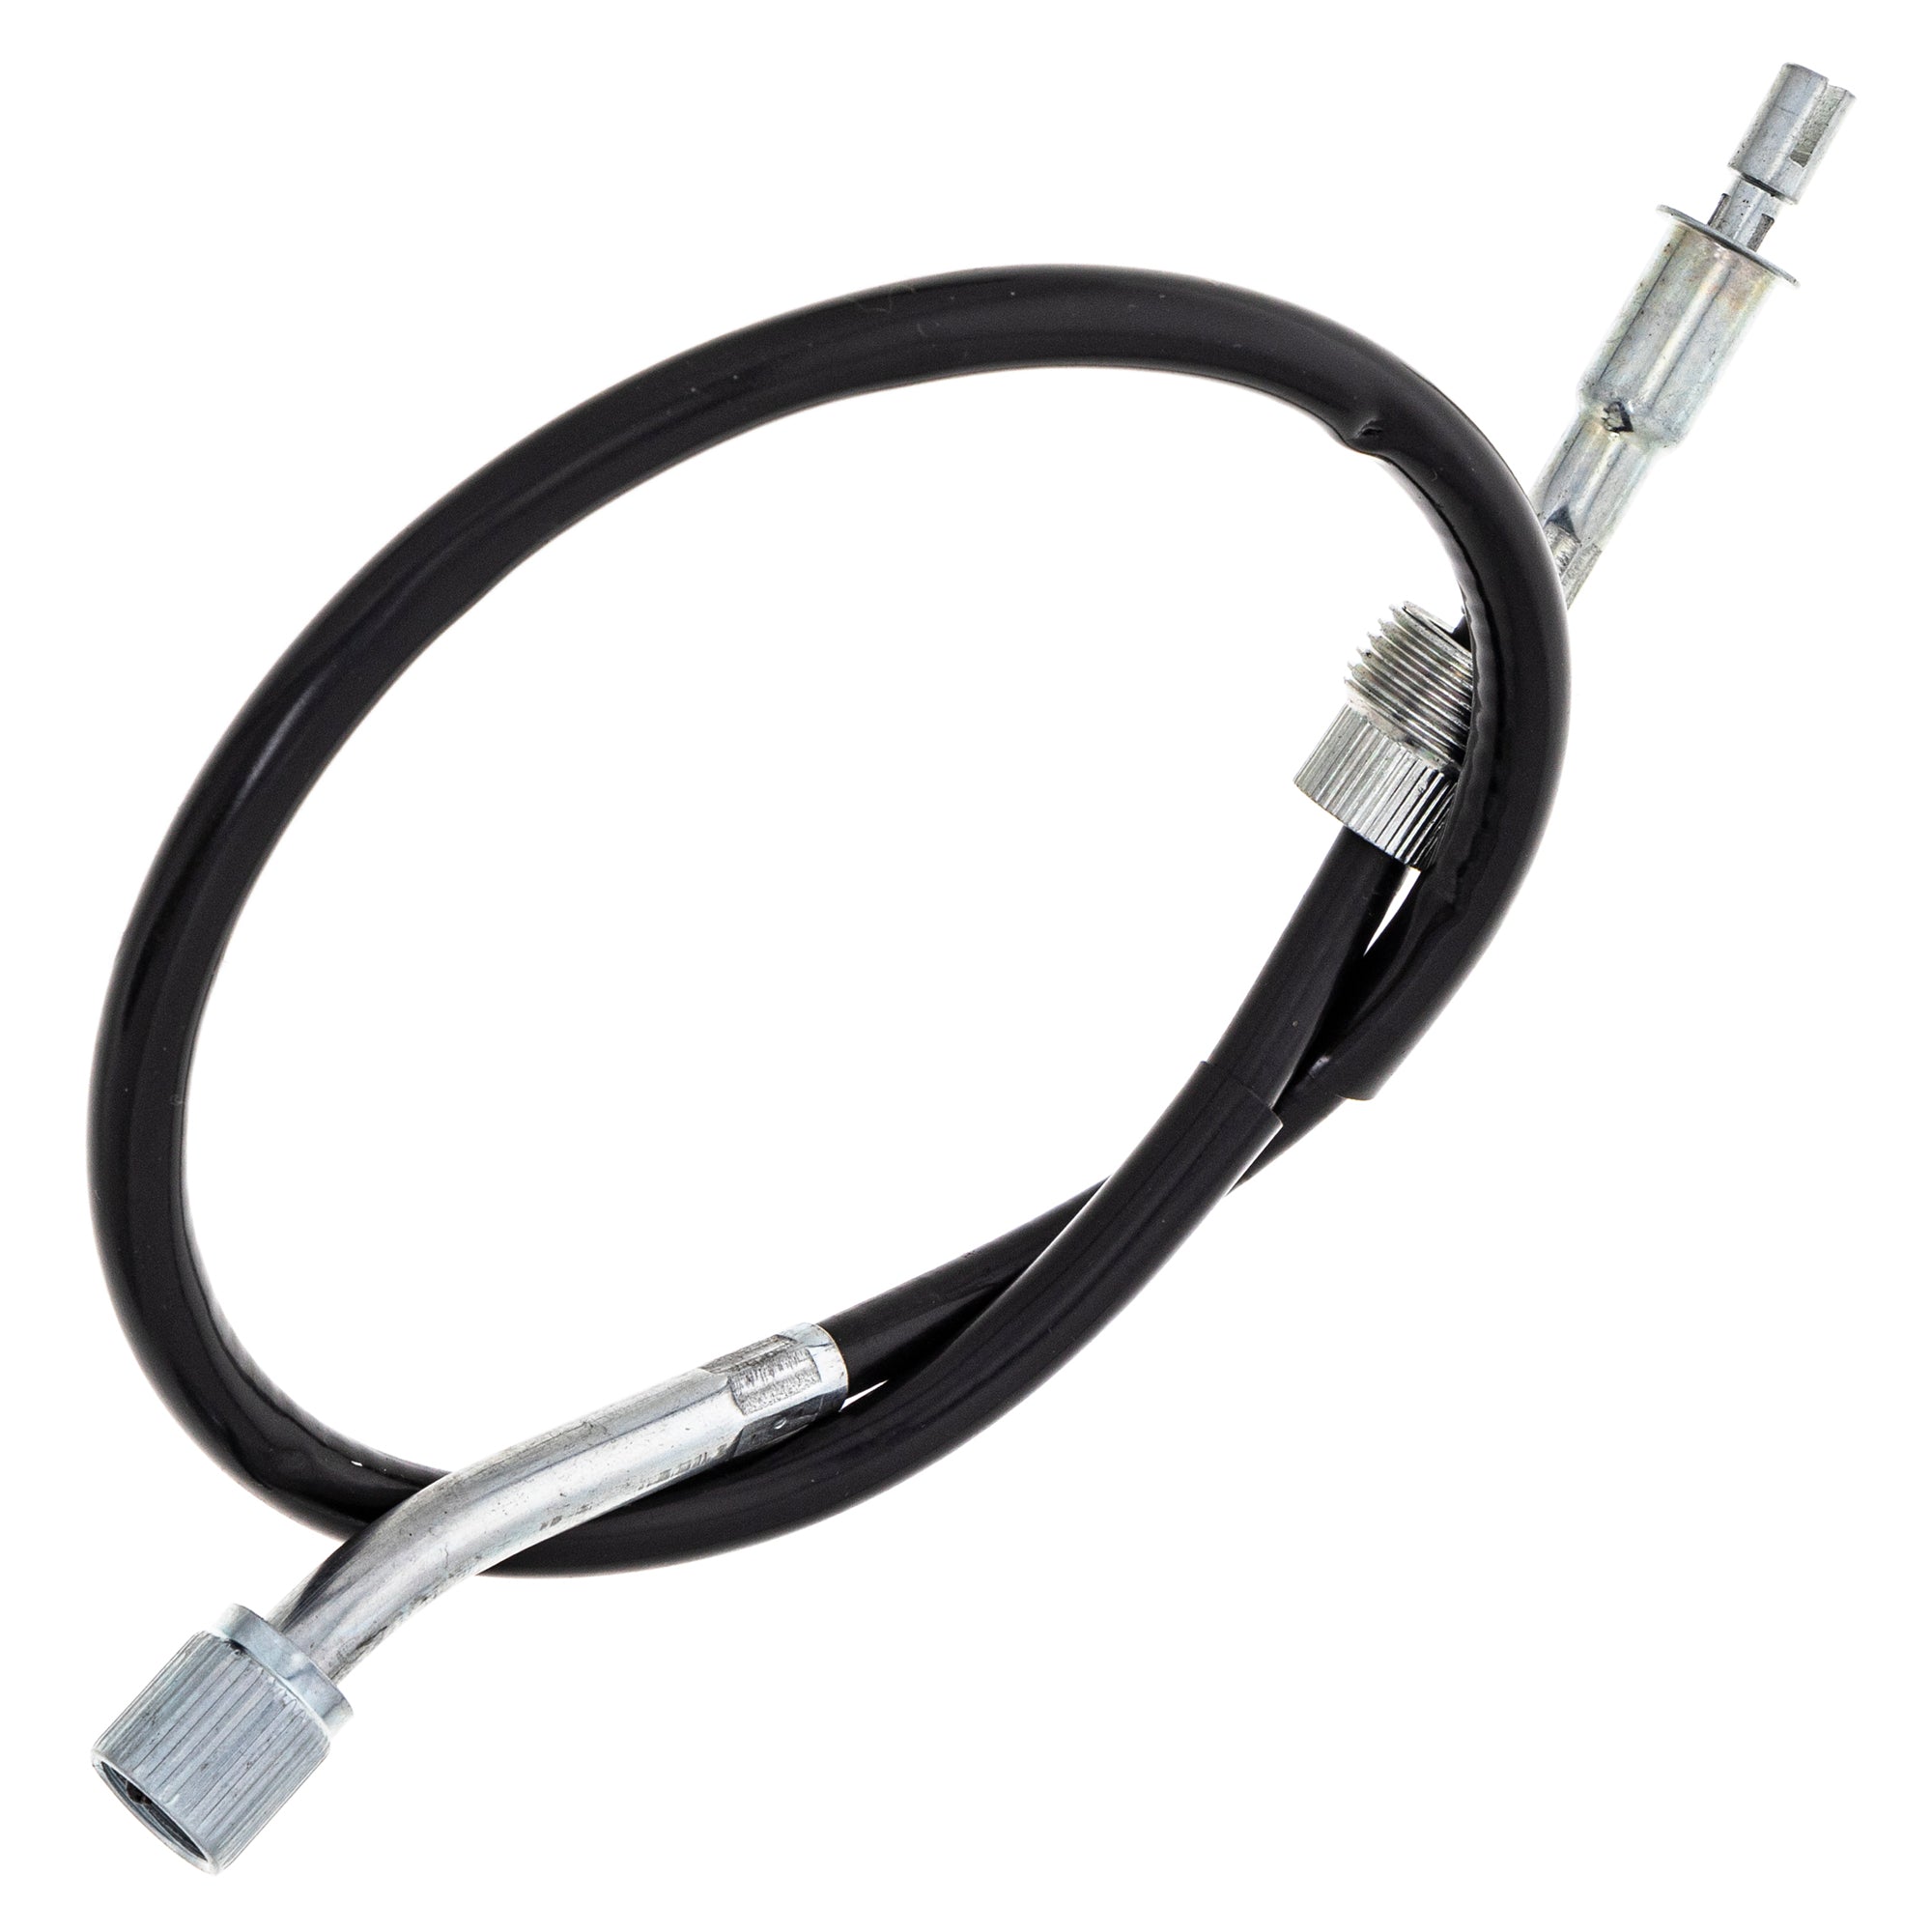 Tachometer Cable for Suzuki GS1000 GS1000E GS1000G GS1000GL